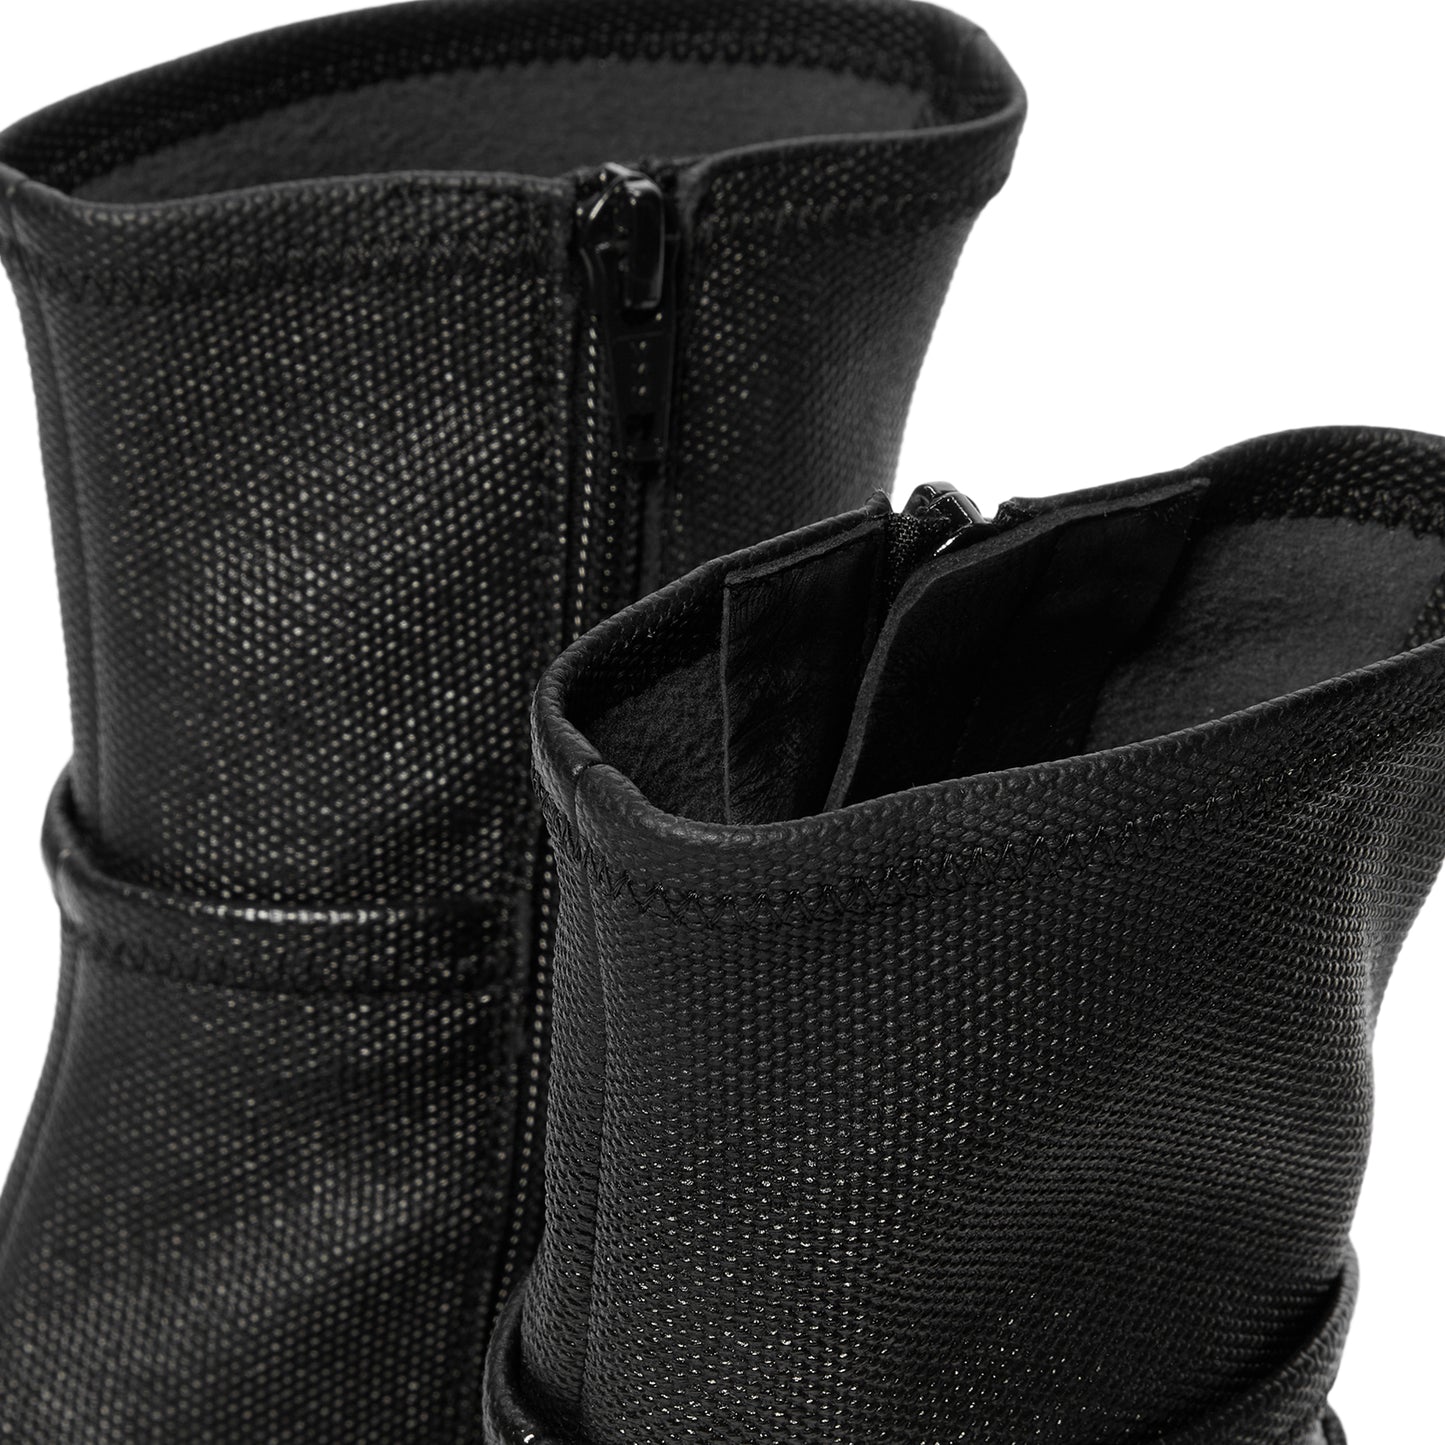 MM6 Maison Margiela Layered Stretch Anatomic Ankle Boot (Black)